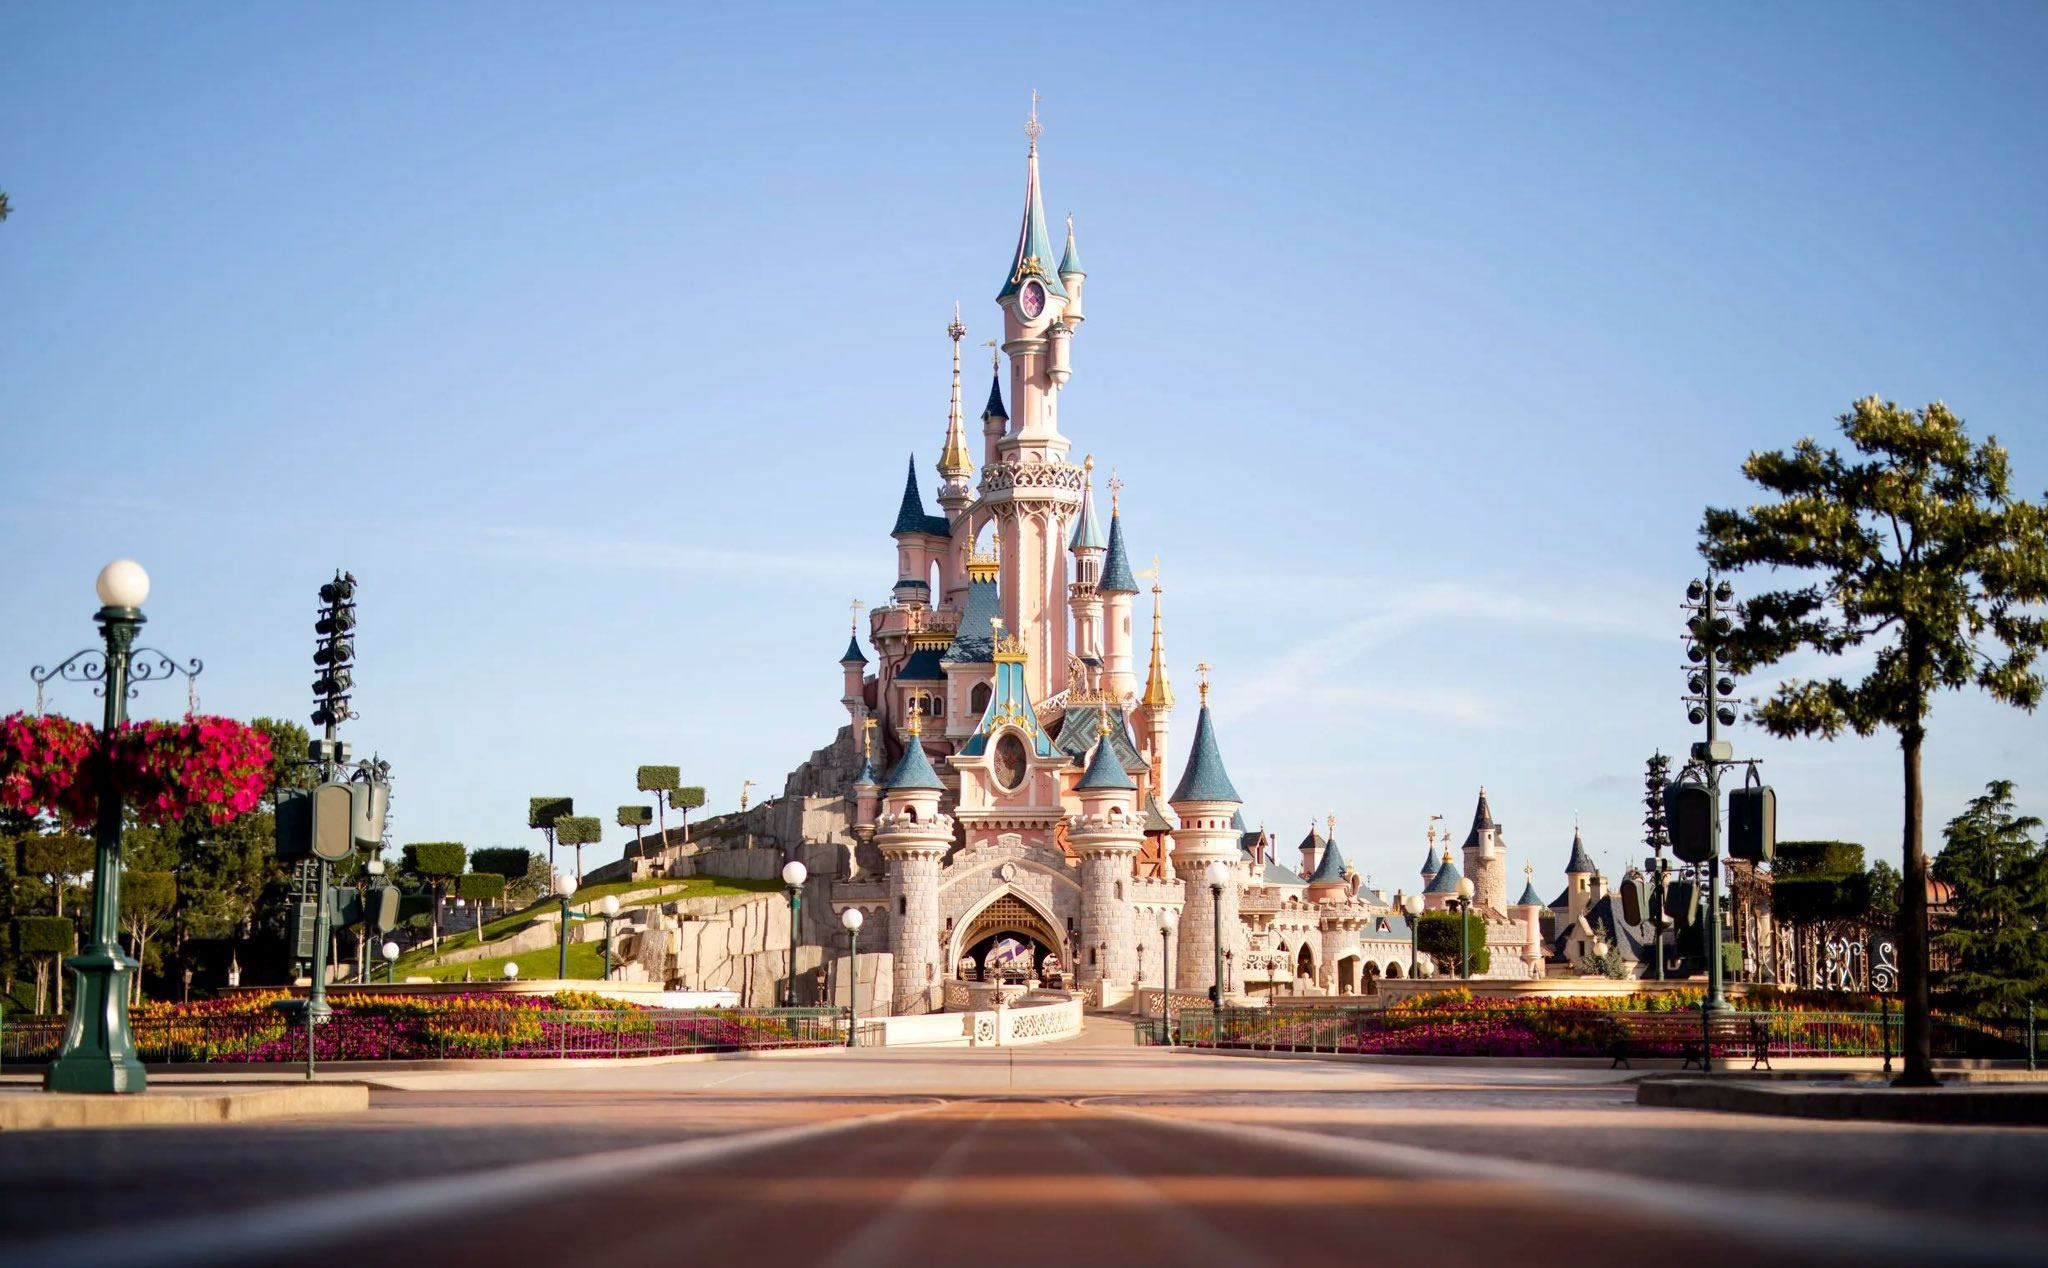 Is Disneyland Paris Open All Year?